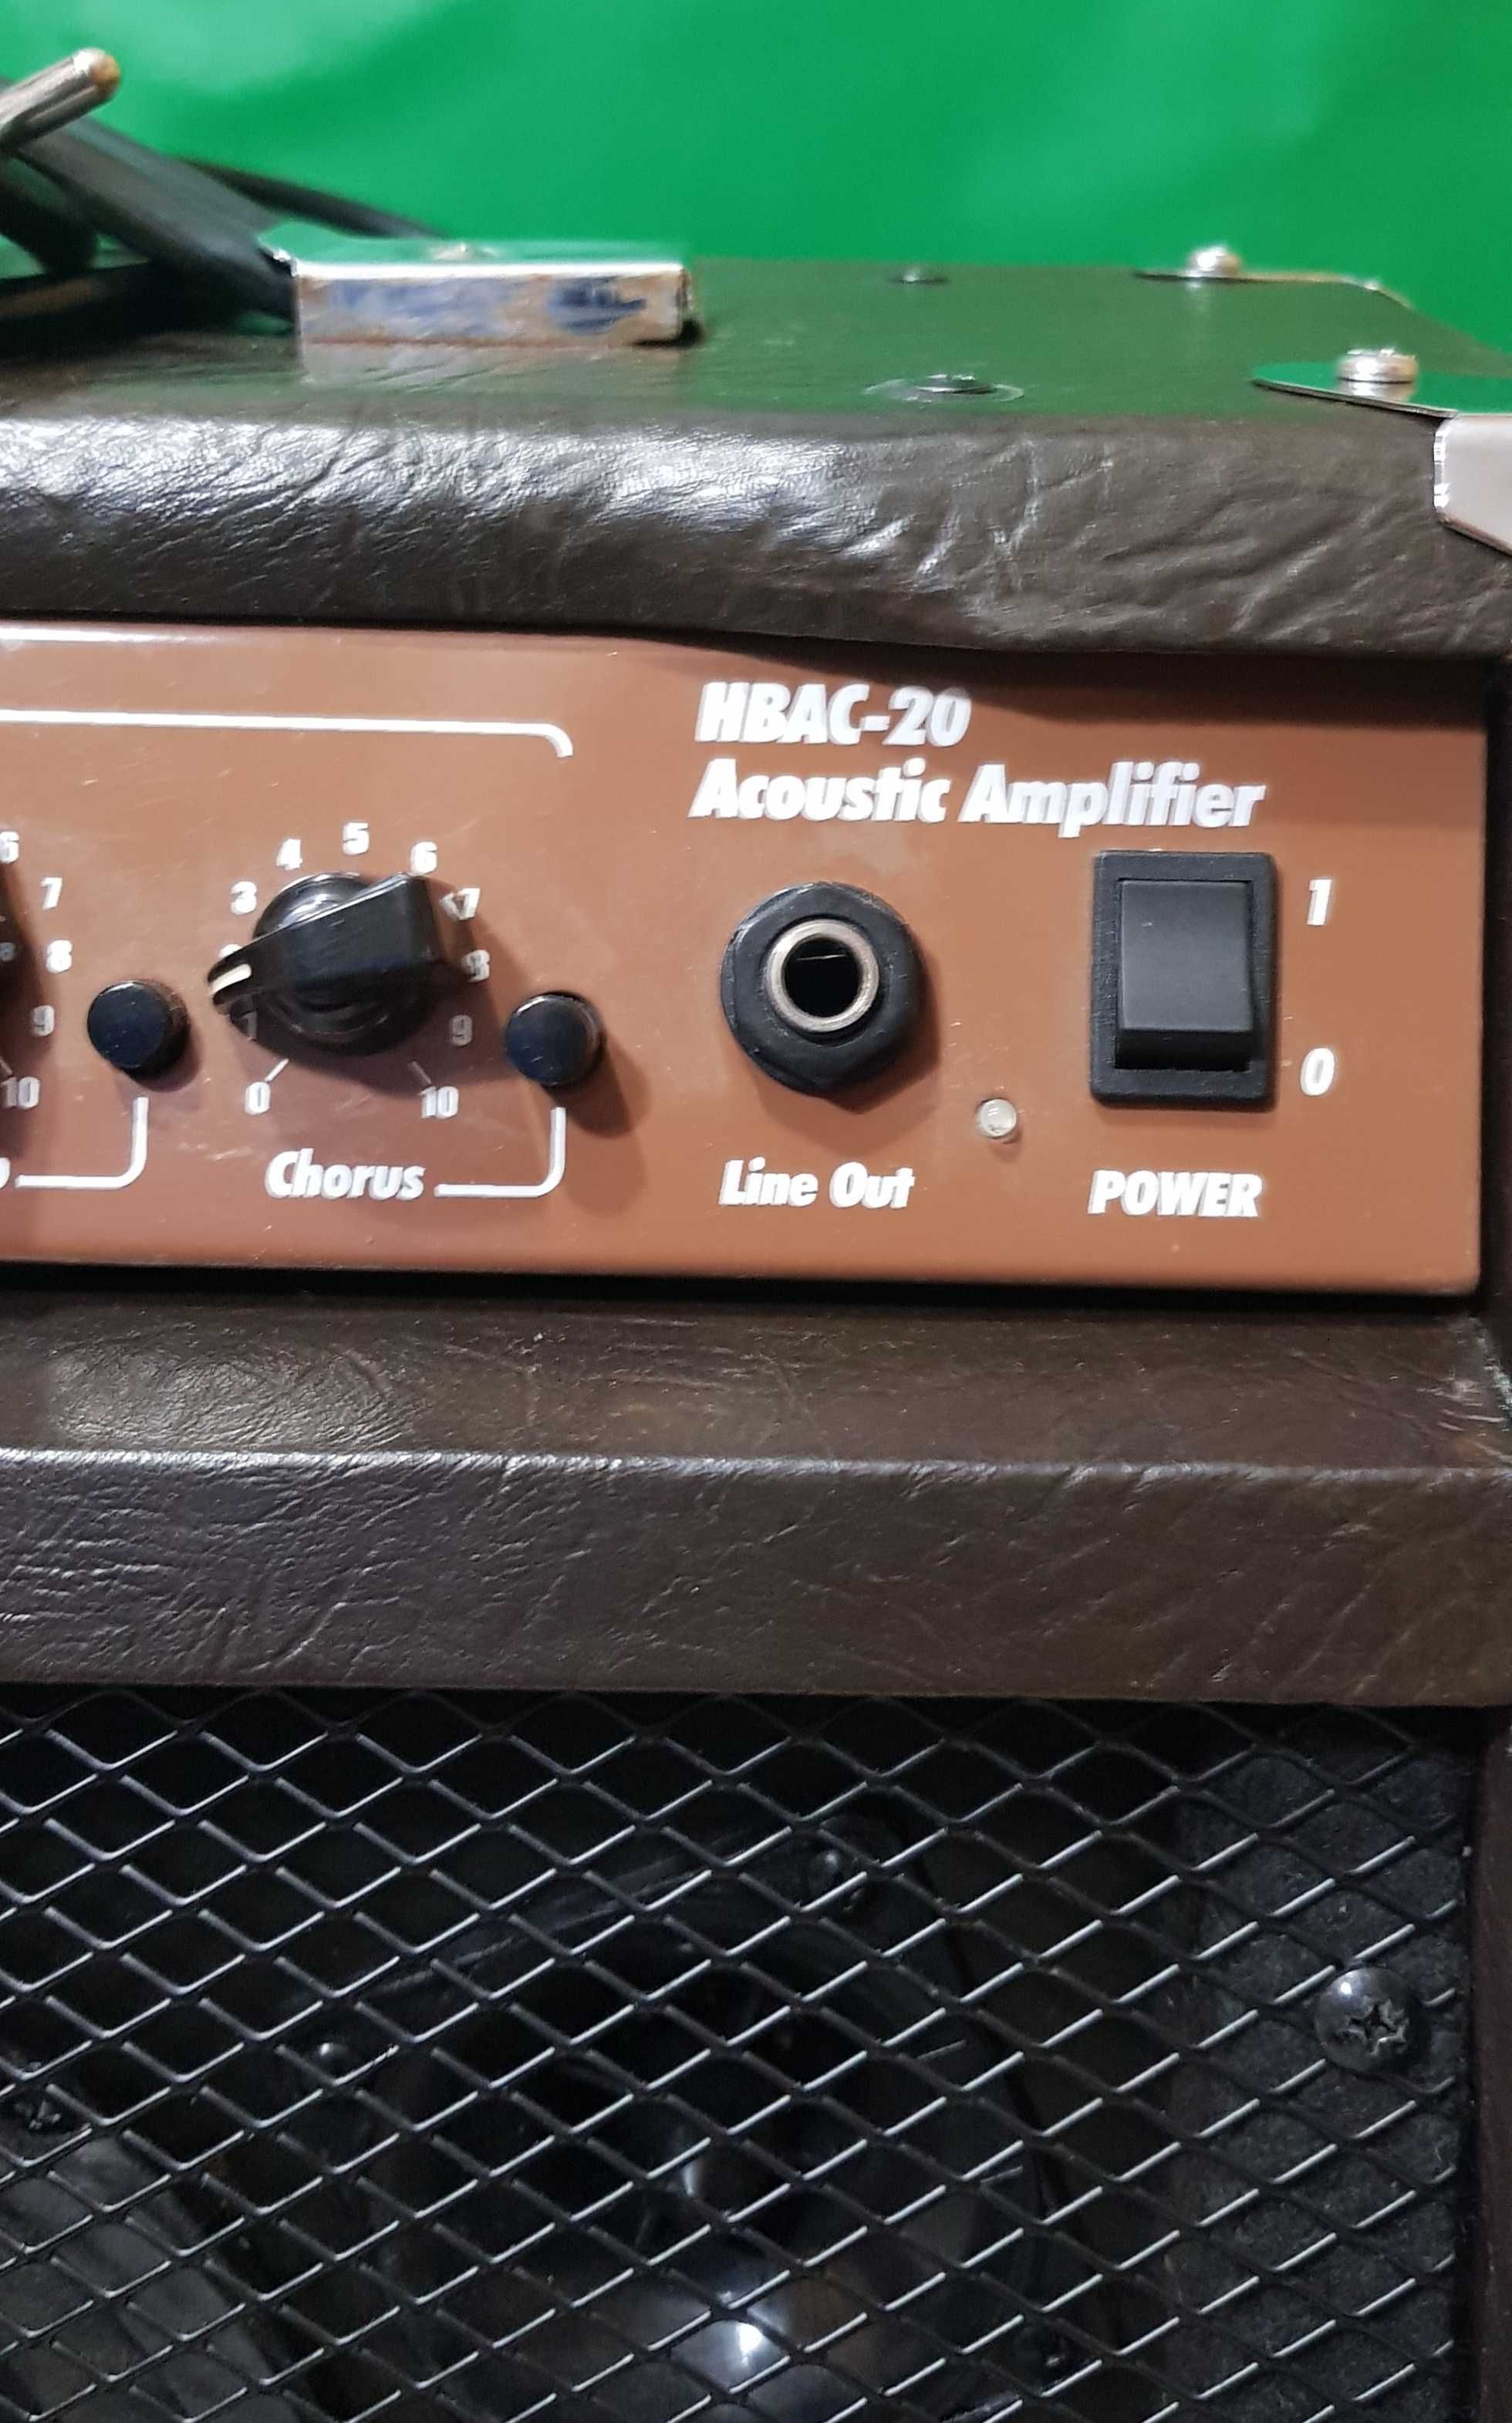 Amlificator ghitara HBAC-20